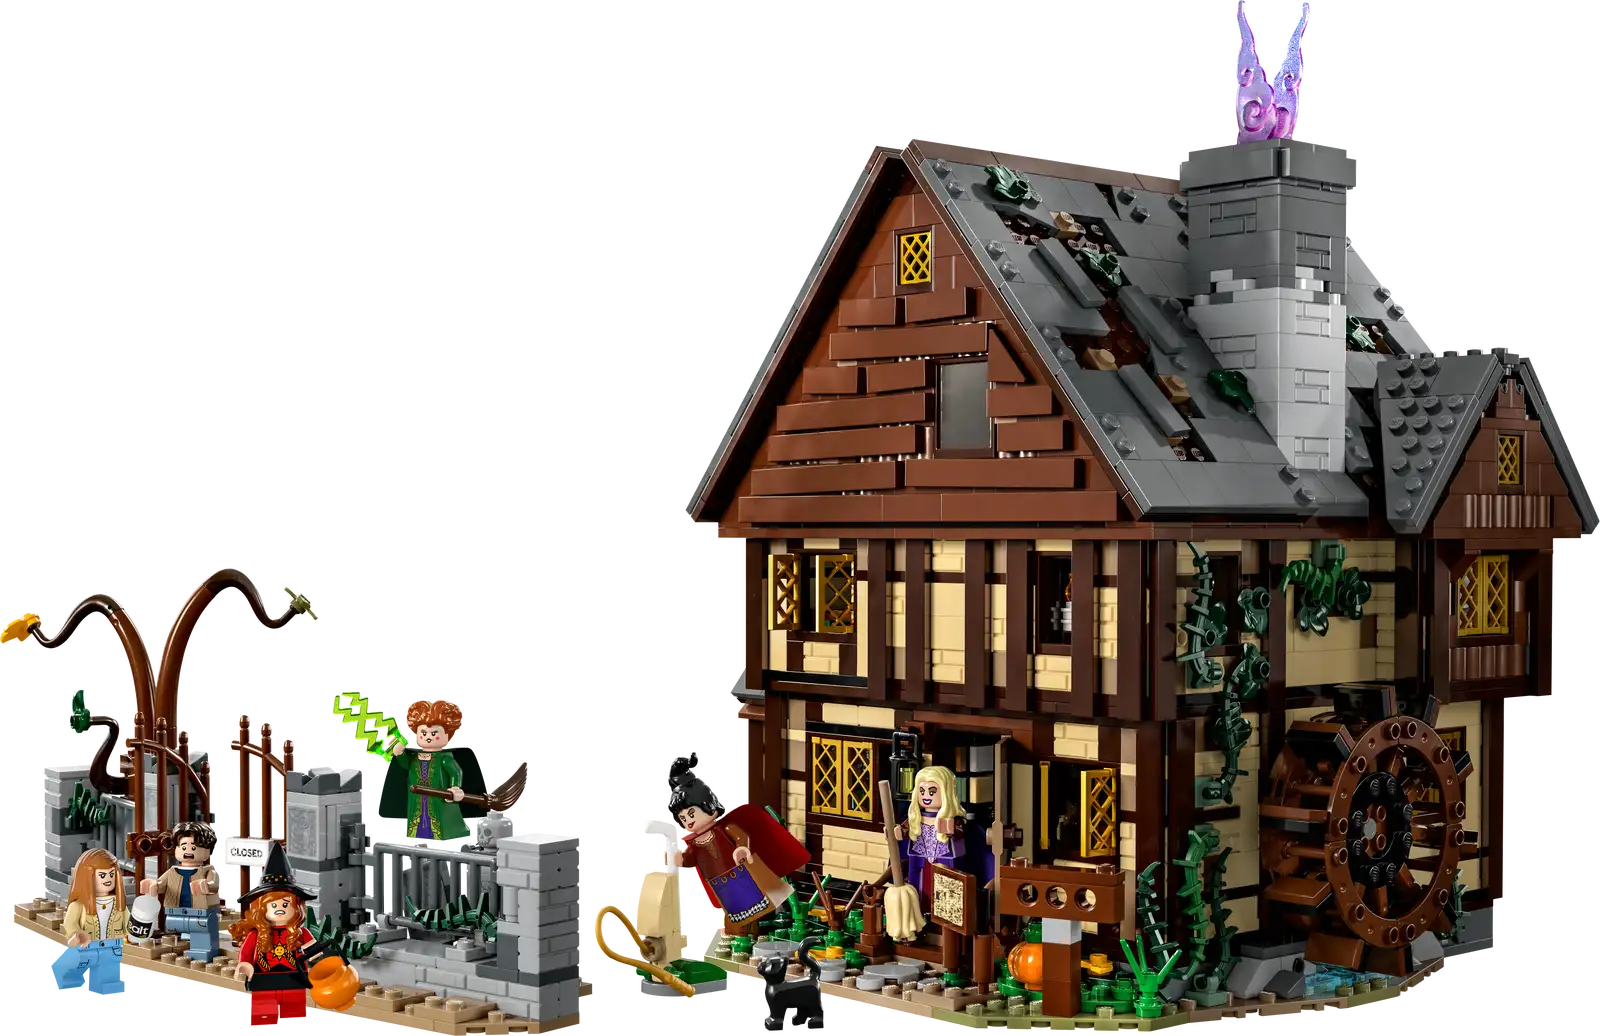 Lego ideas: Disney Hocus Pocus: The Sanderson Sisters' Cottage